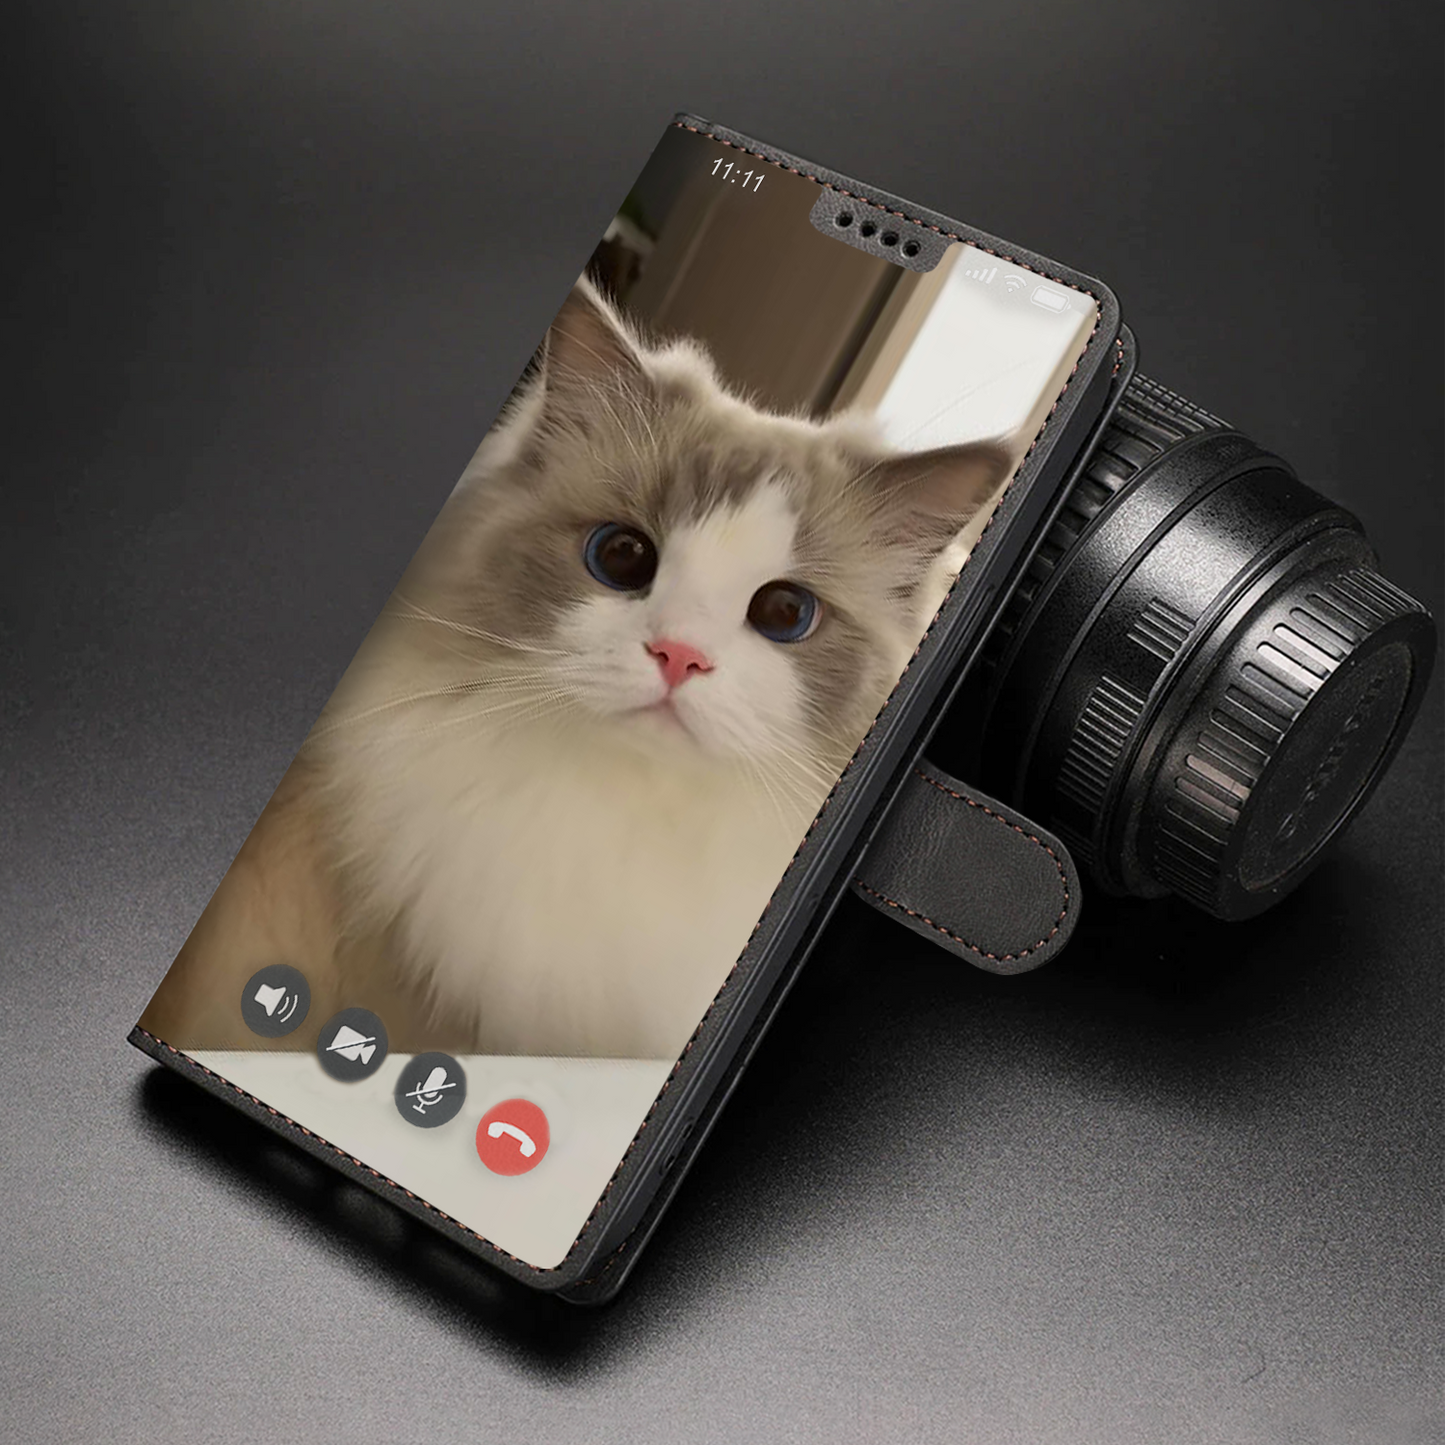 Face Time With Your Cat – Personalisiertes Portemonnaie mit dem Foto Ihres Haustieres